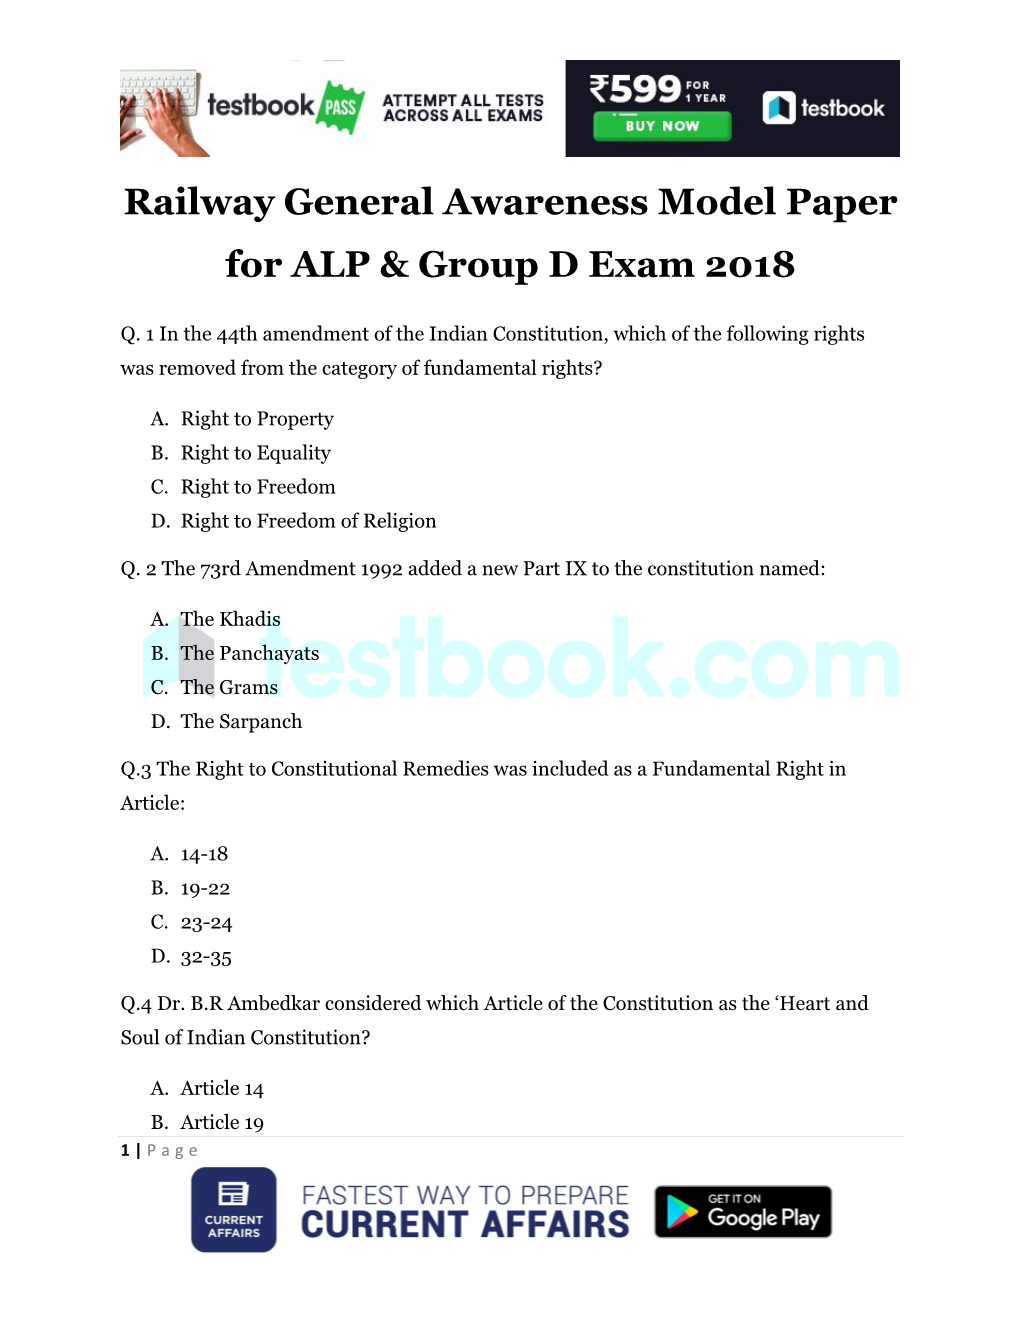 Railway General Awareness Model Paper for ALP & Group D Exam 2018